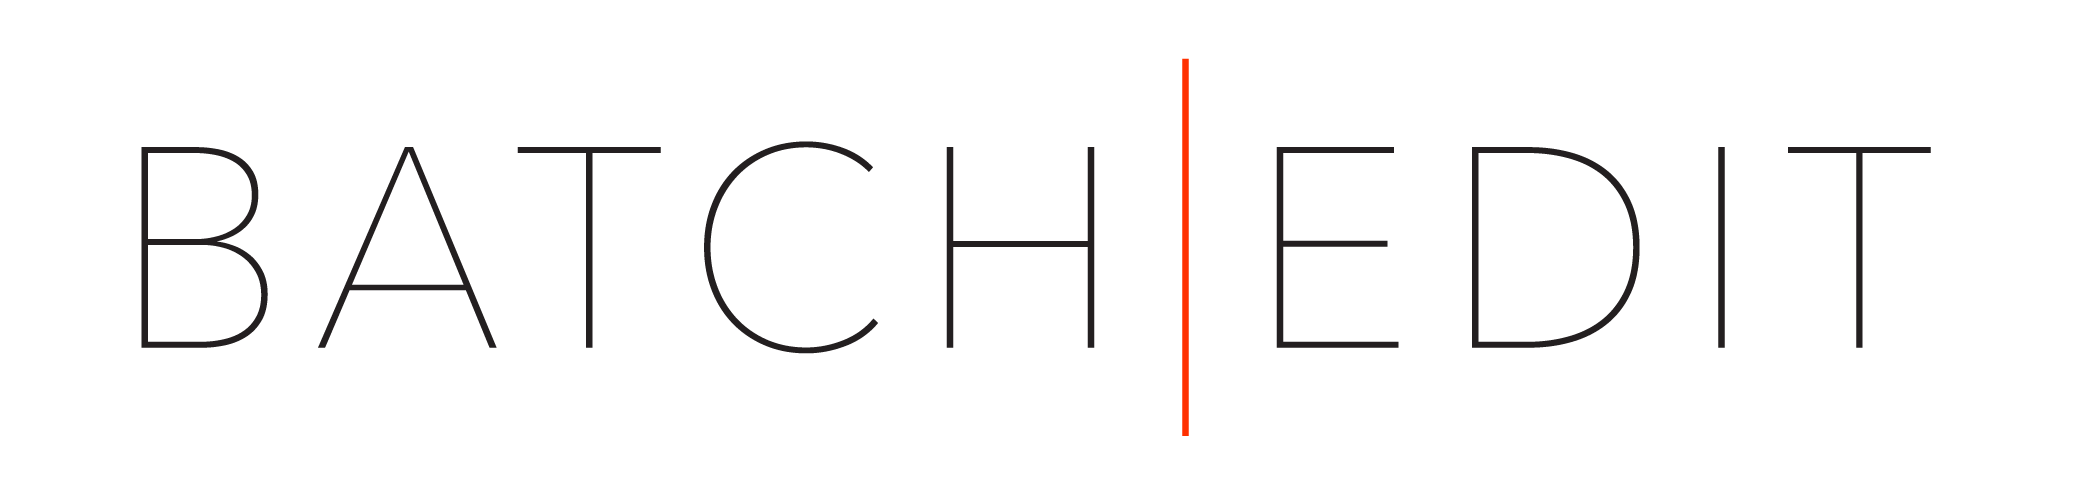 Batchedit-logo-RGB-black.png